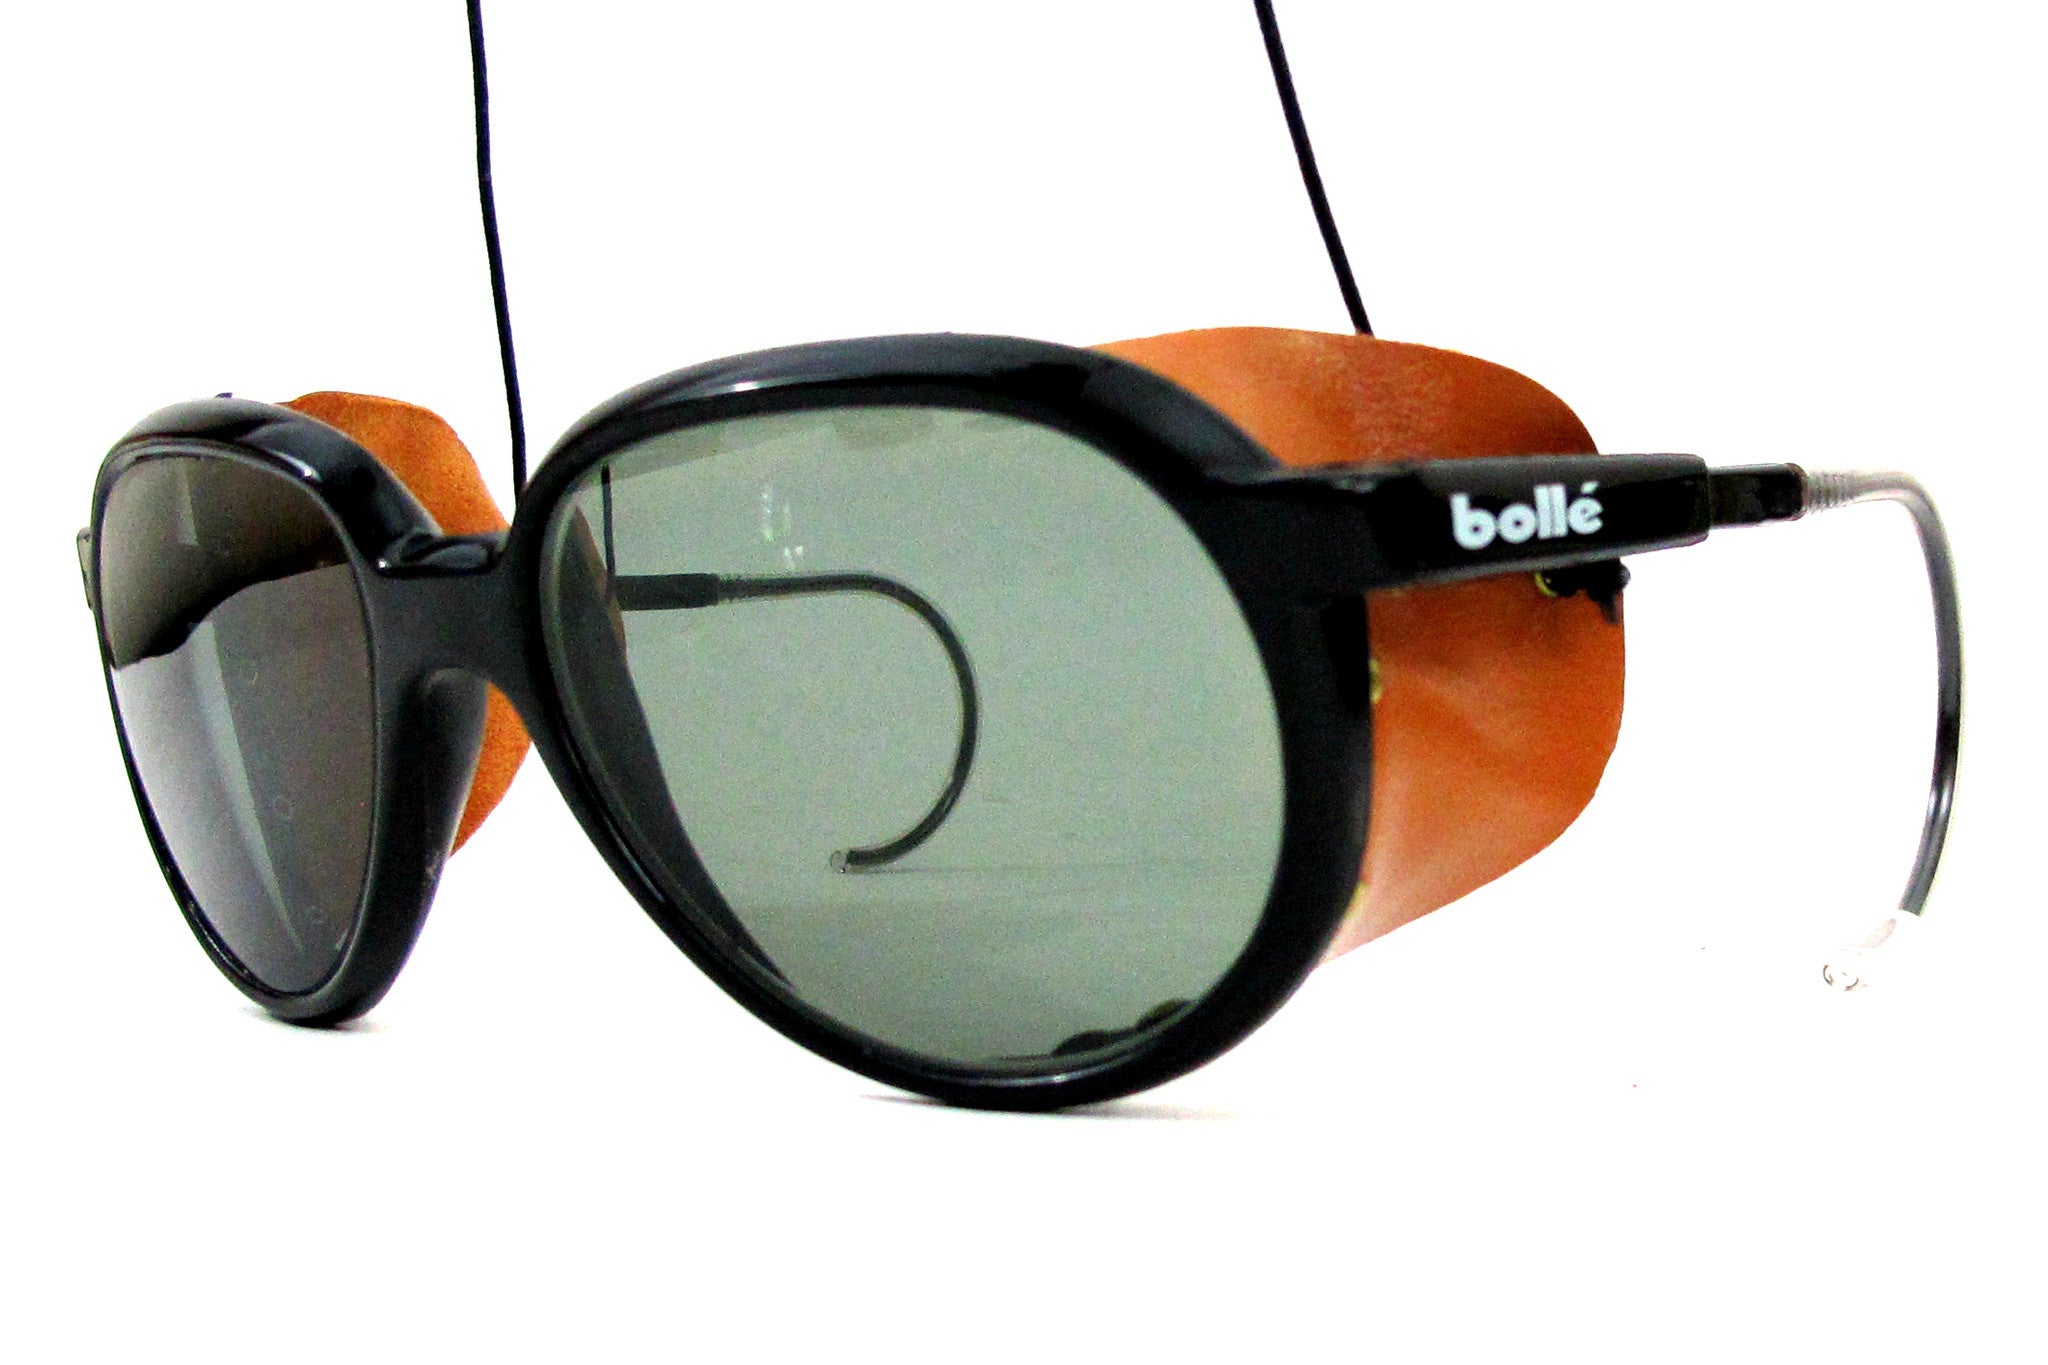 https://cdn.shopify.com/s/files/1/0073/1122/products/vintage_bolle_glacier_leather_sideshields_sunglasses_side.jpg?v=1491001969